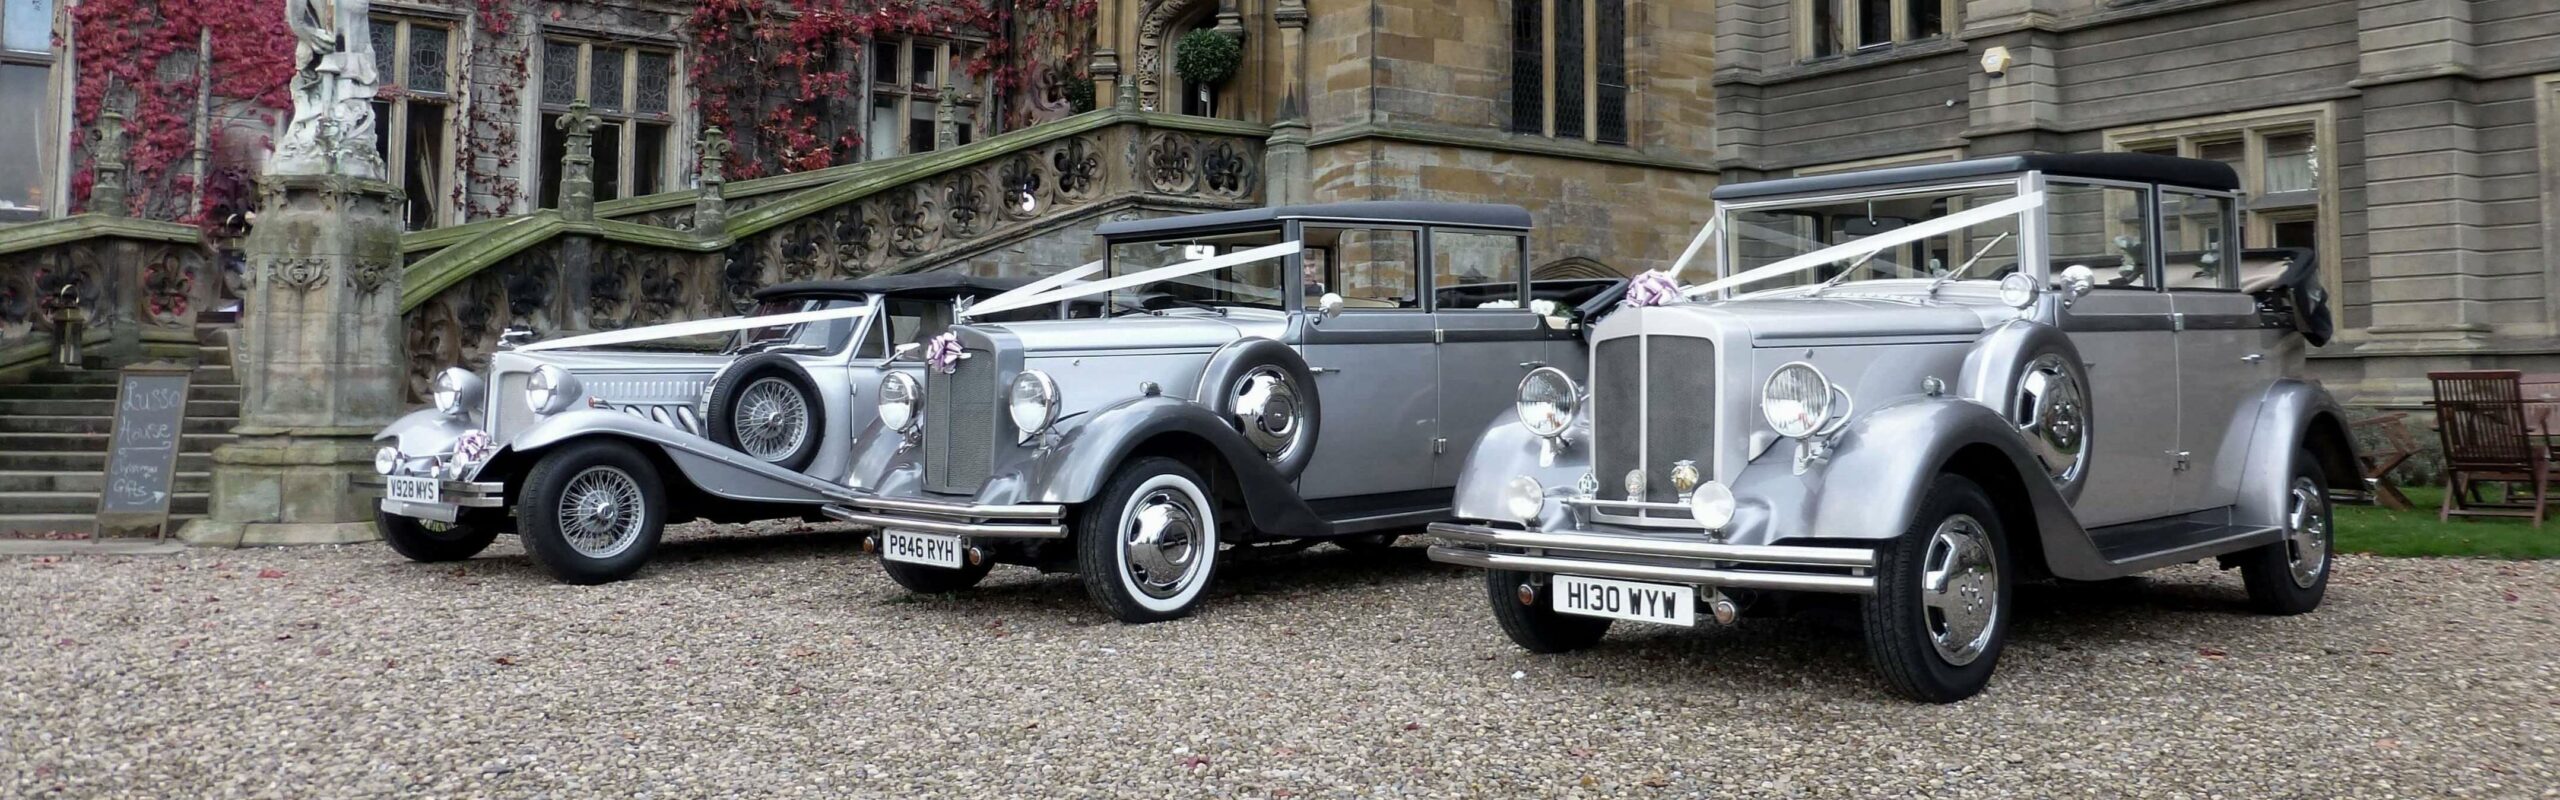 wedding cars barnsley